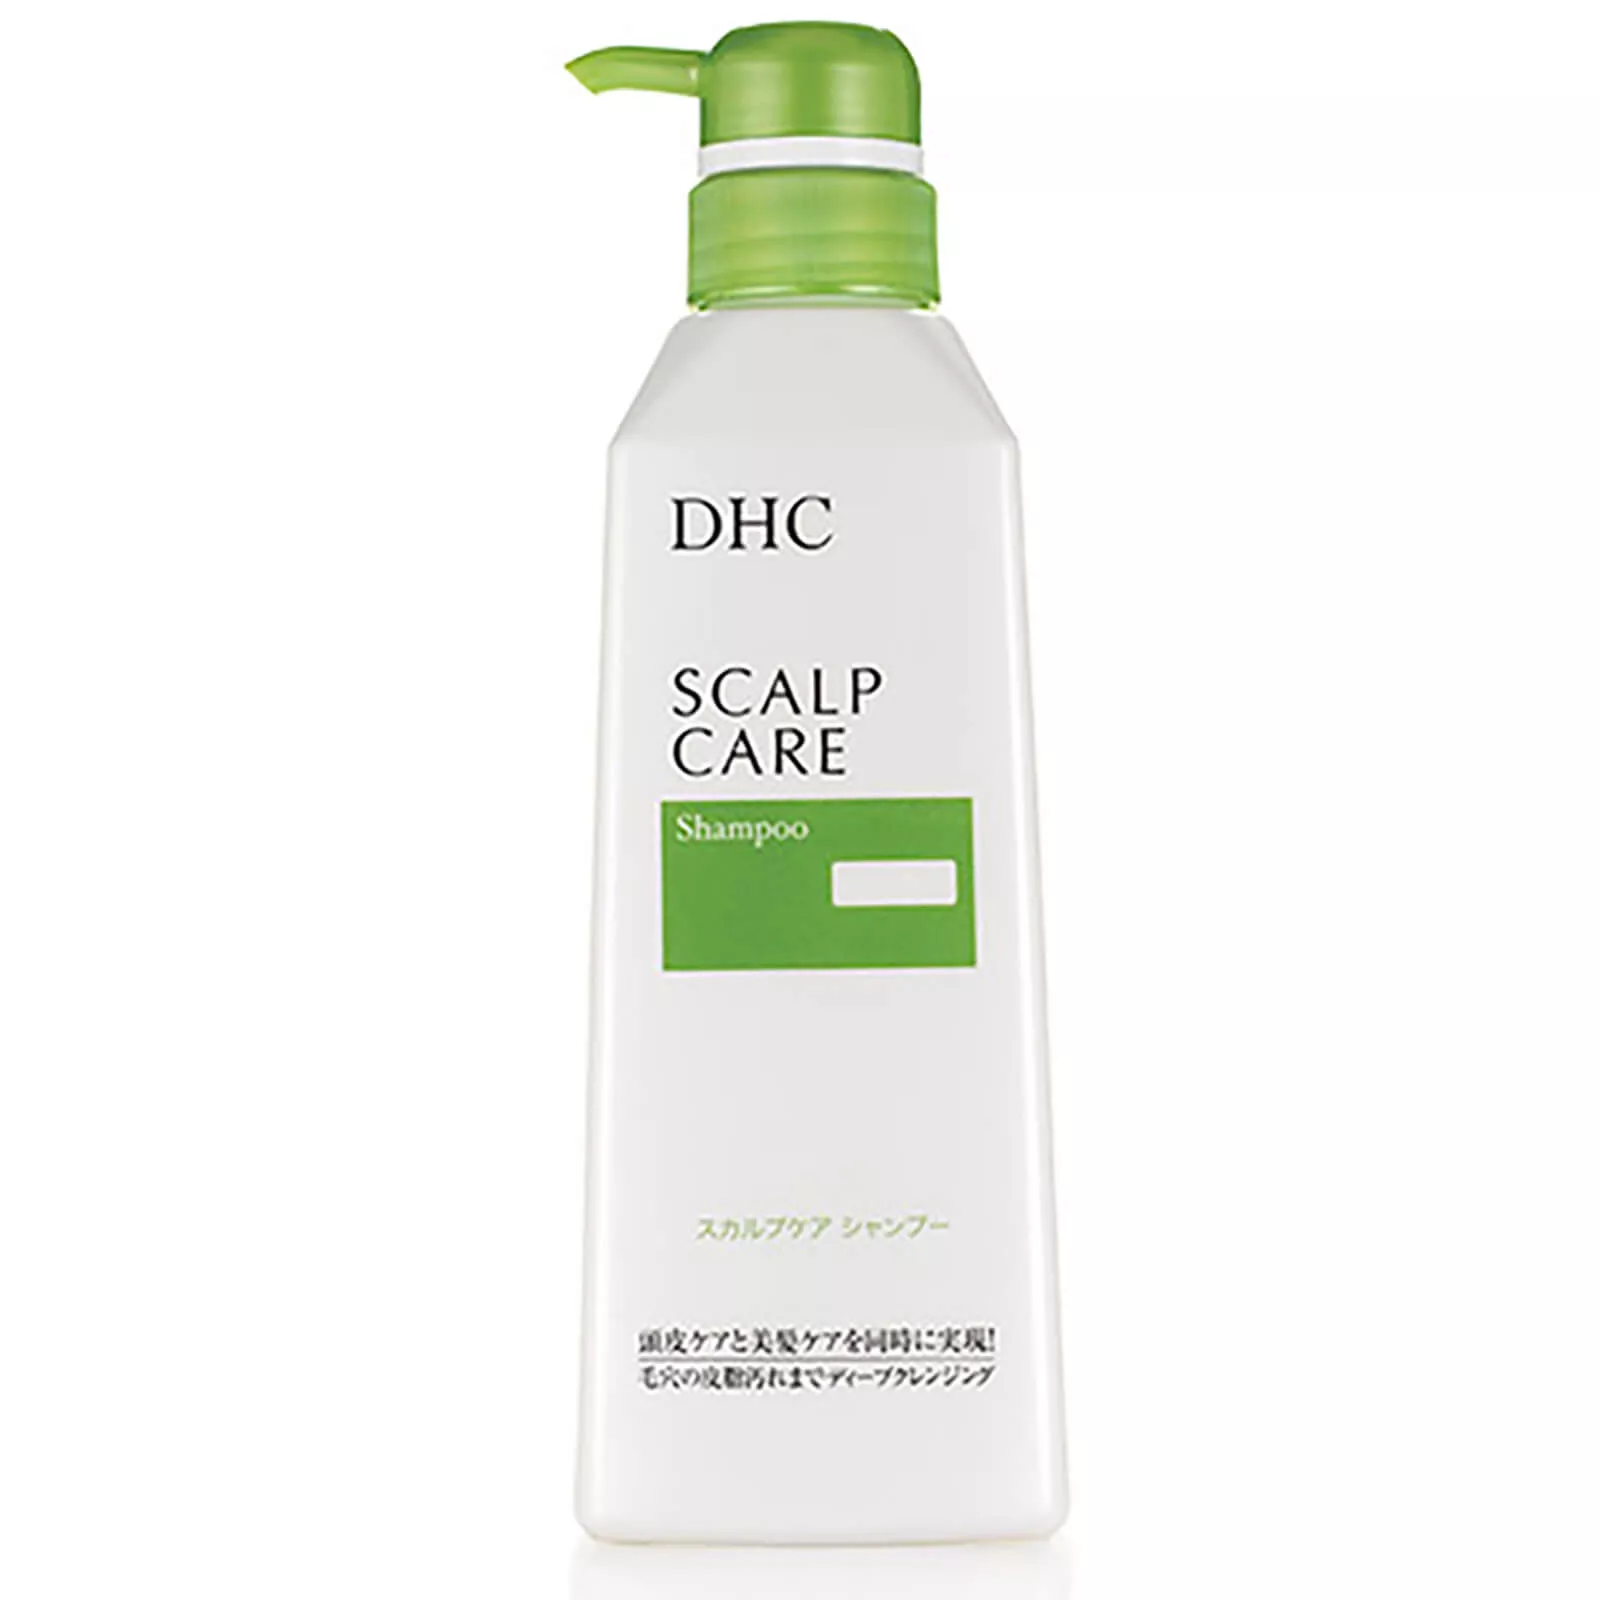 scalp-care-shampoo